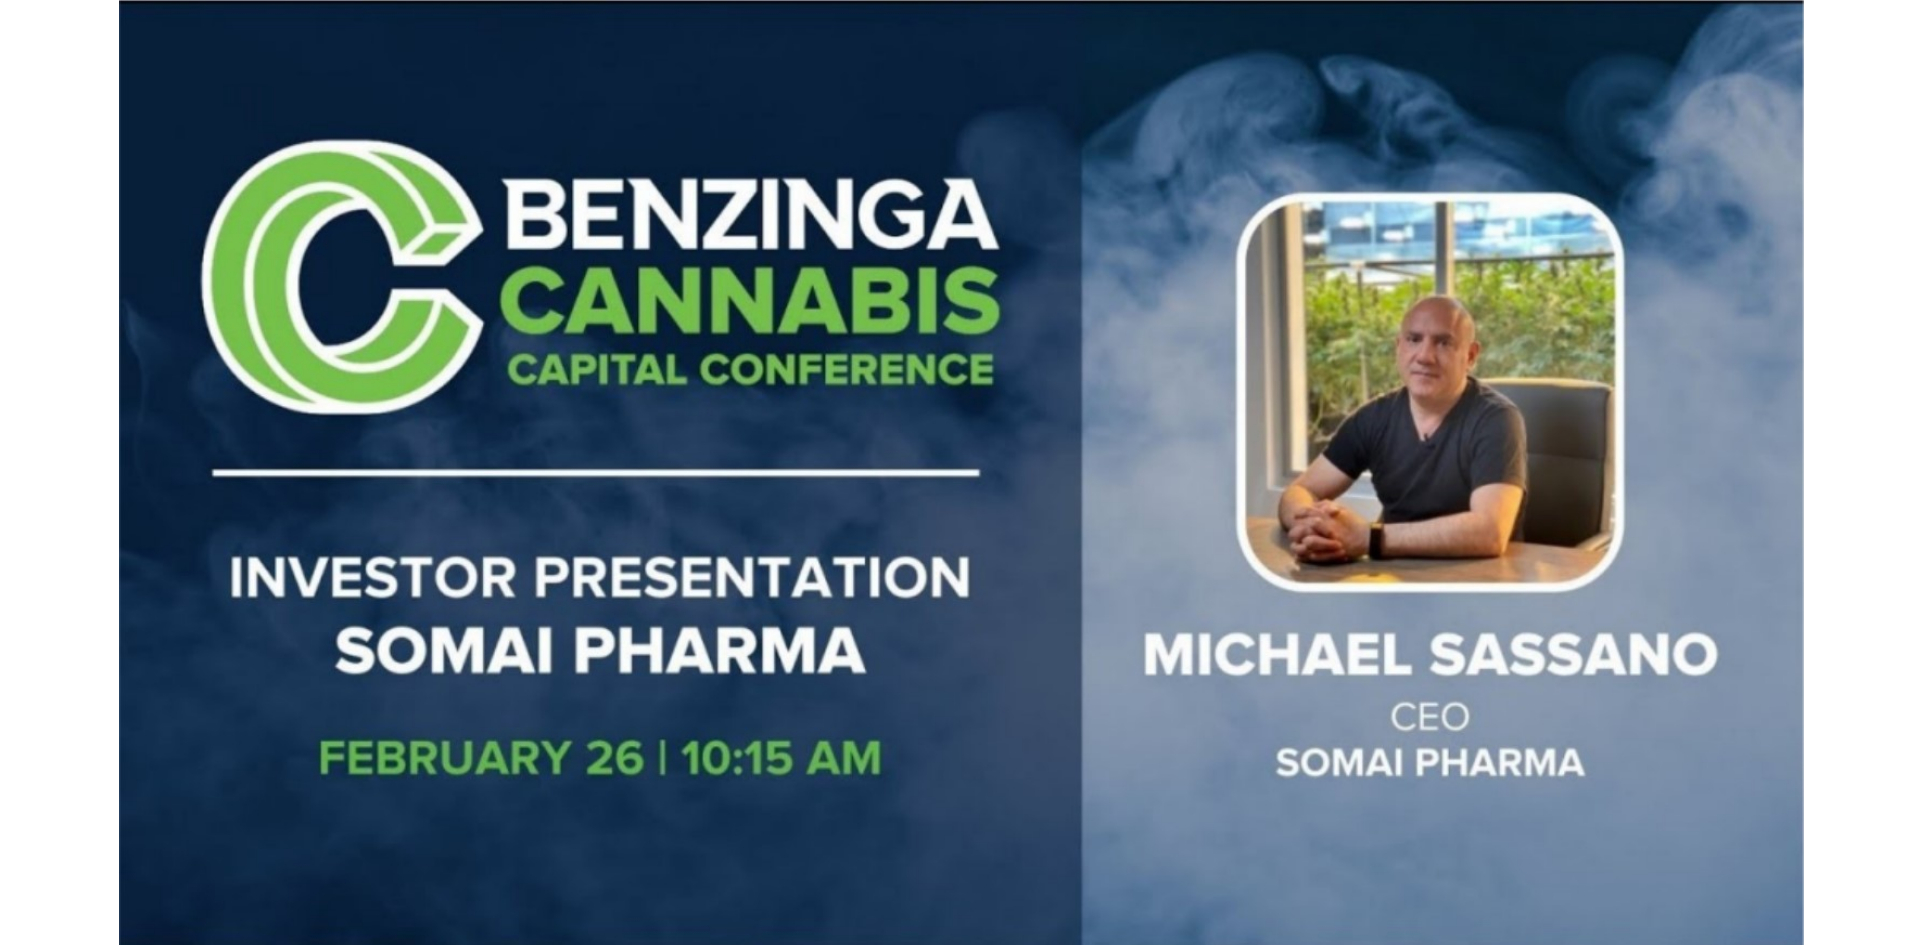 Benzinga Cannabis Capital Conference | February 25-26, 2021 | Michael Sassano